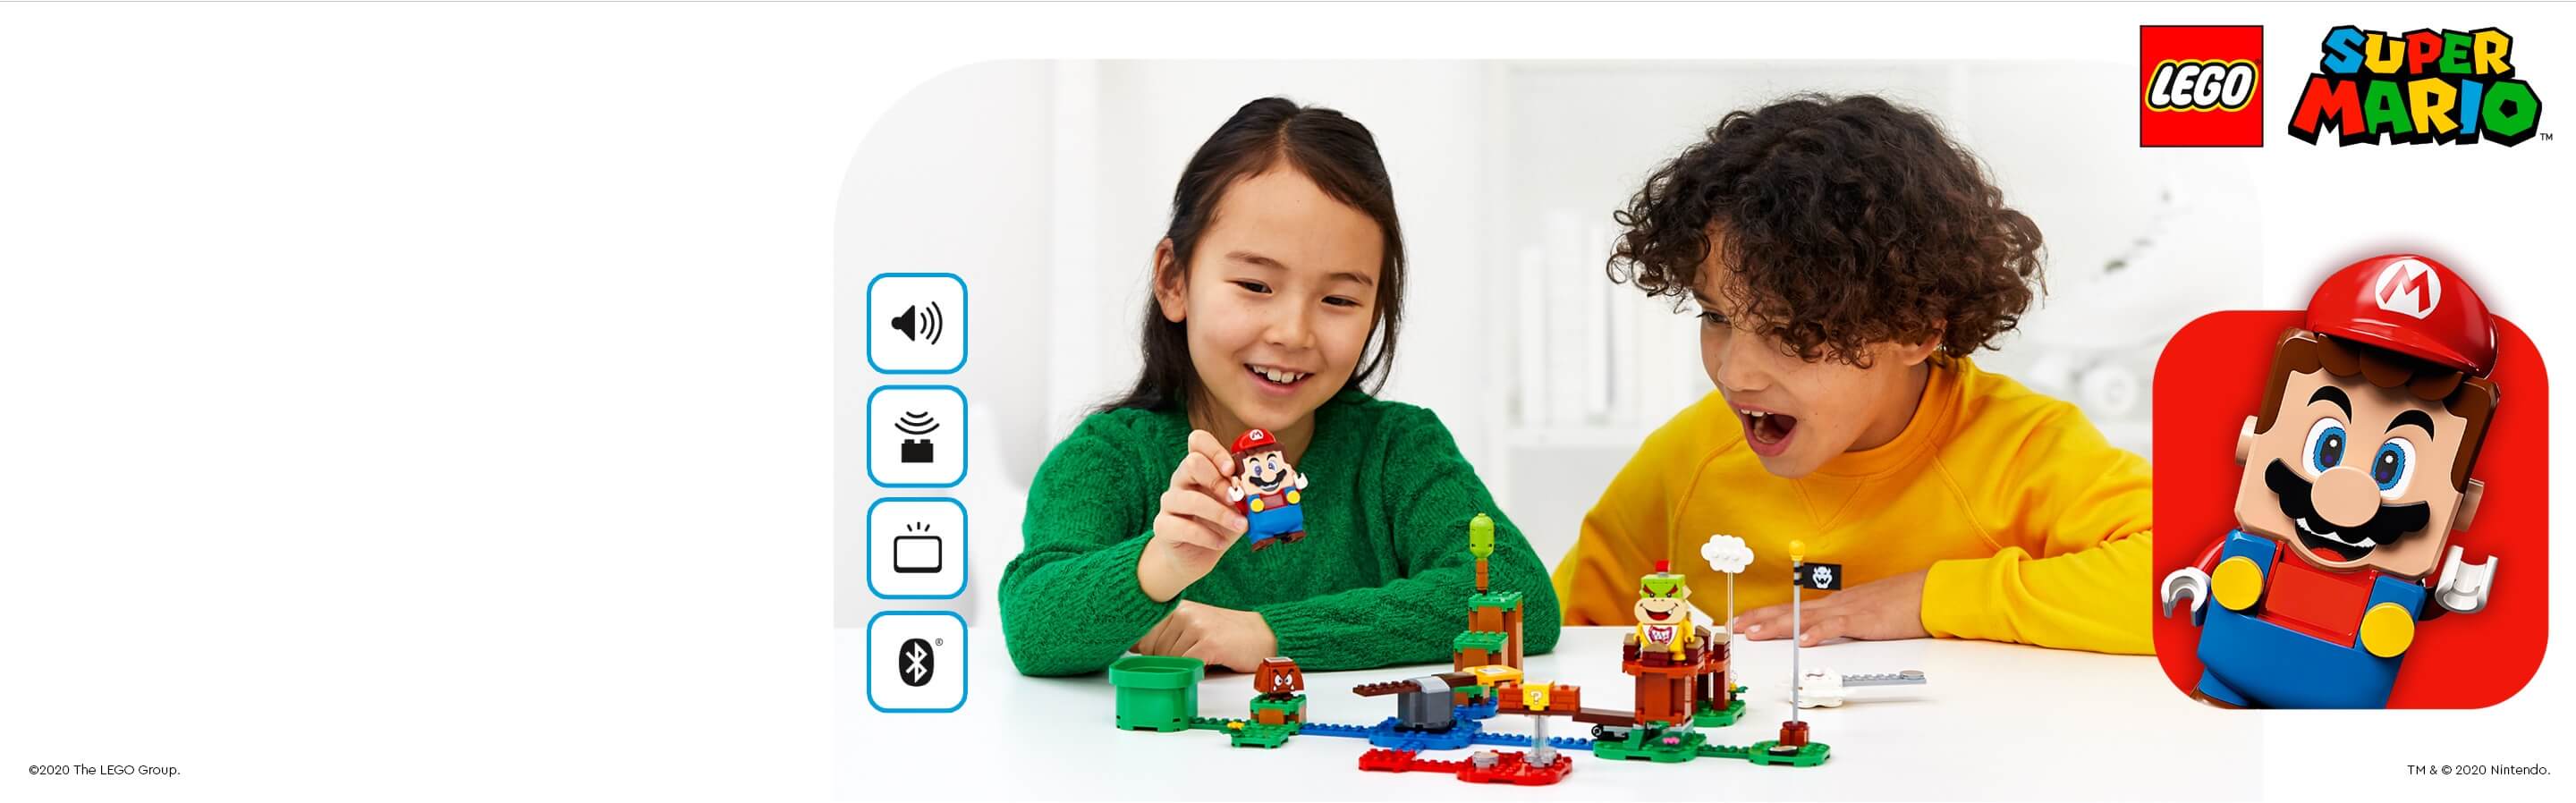 Lego Super Mario Guide Kmart - super mario online rp community roblox